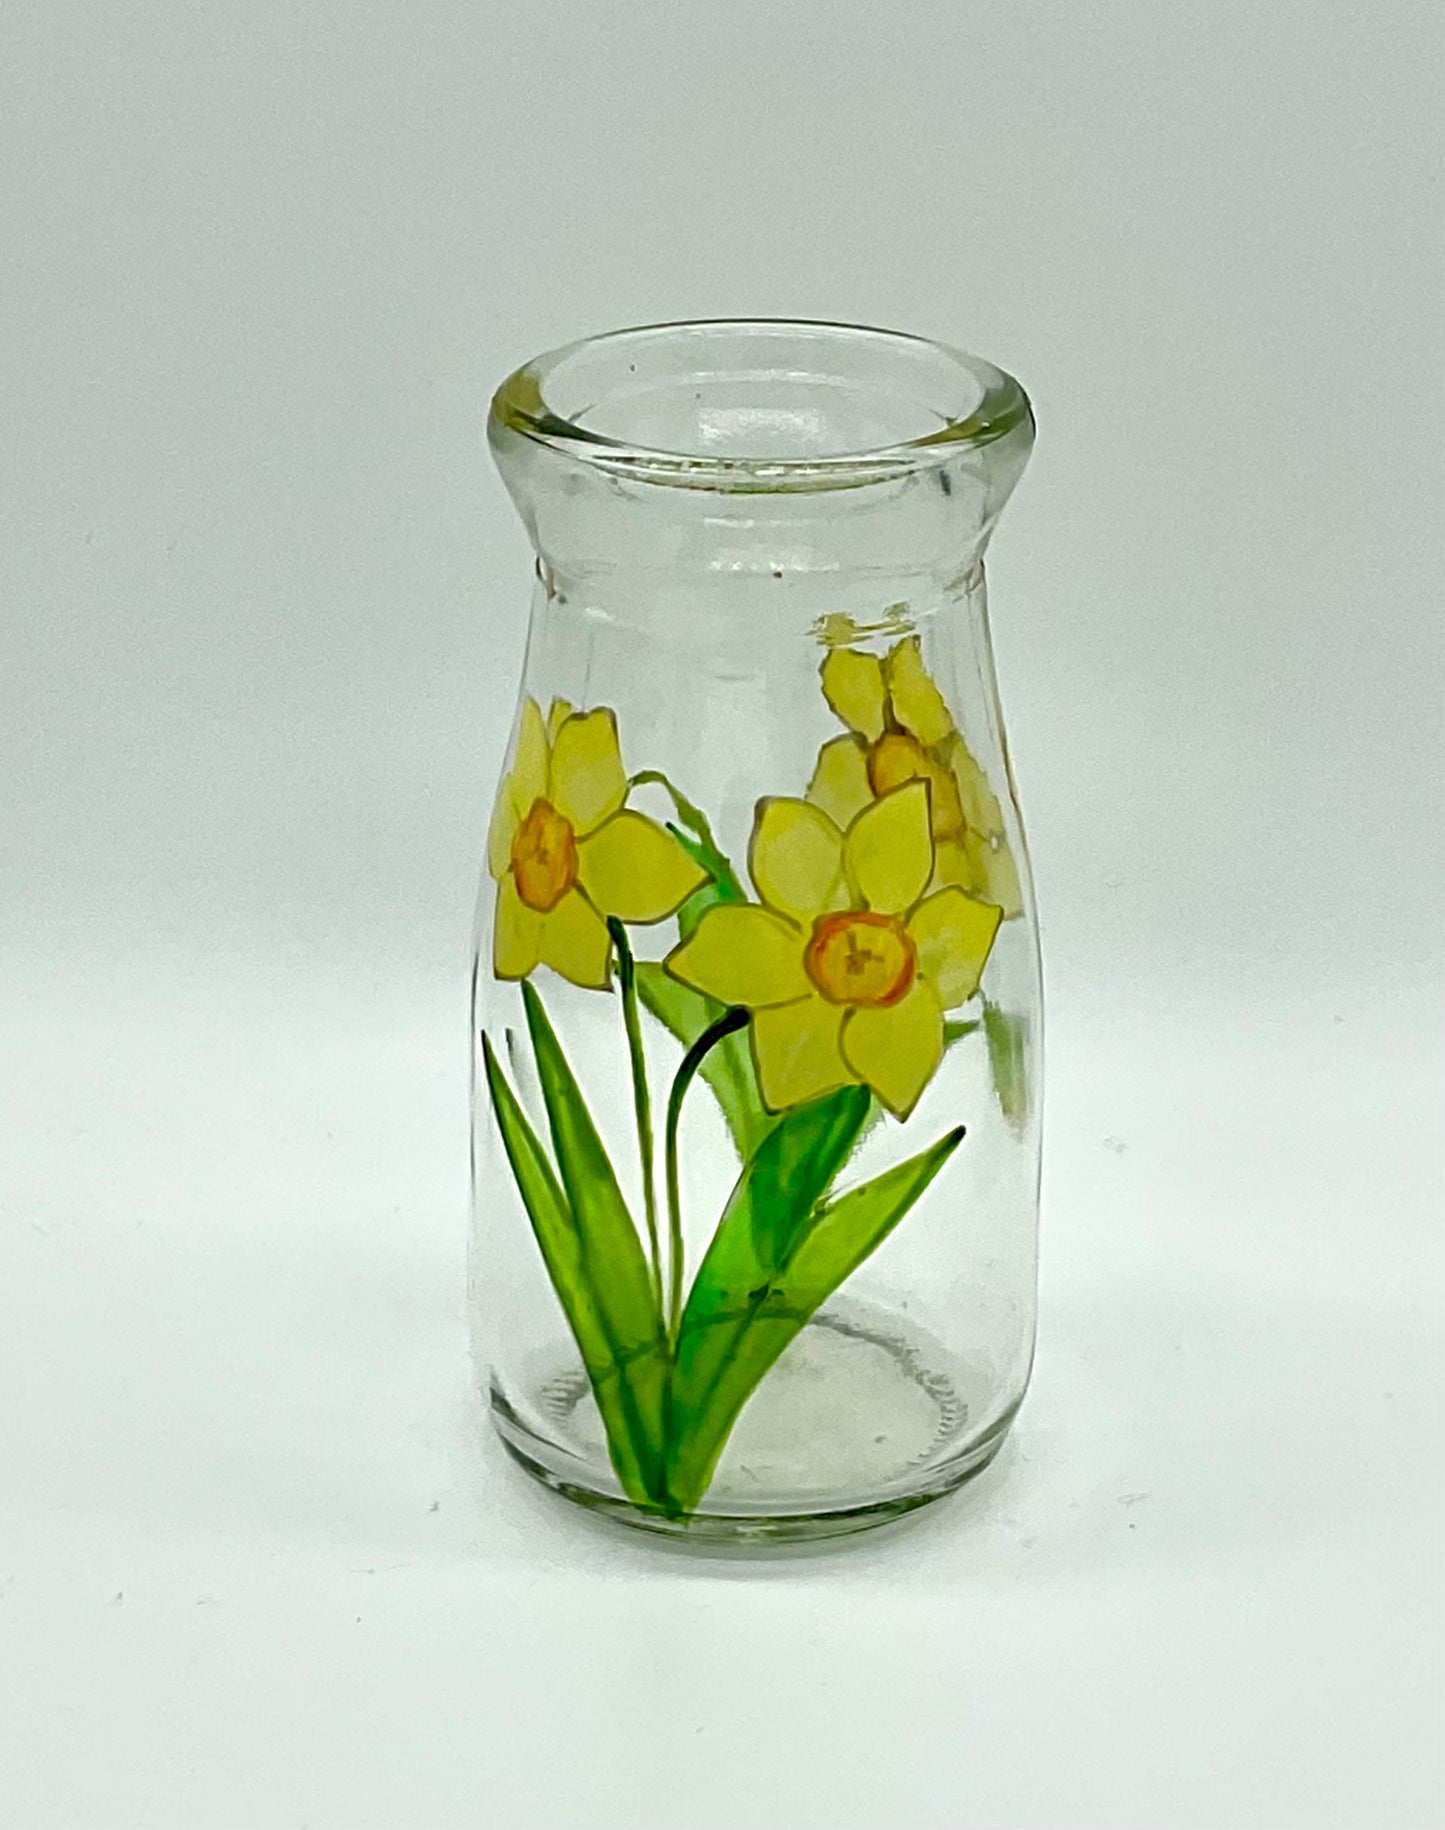 Daffodils mini bottle vase